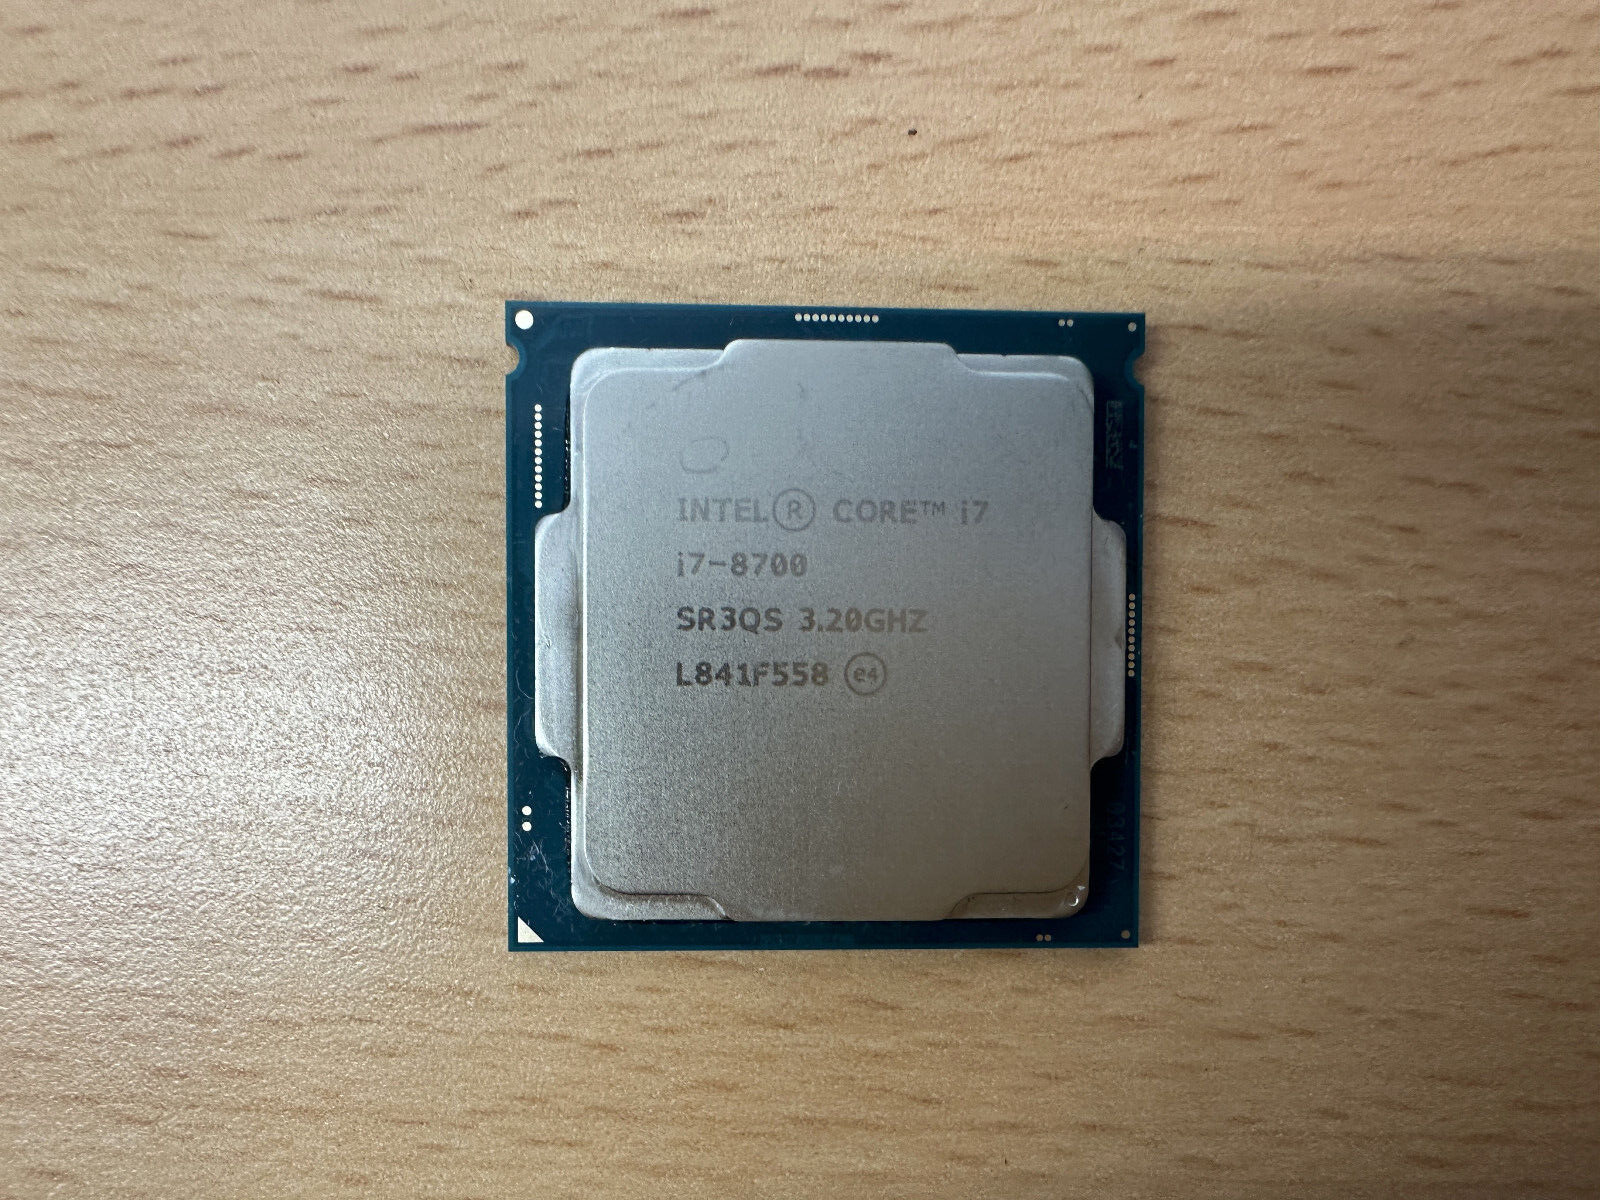 Intel Core i7-8700 SR3QS 3.20GHz 6-Core LGA1151 CPU Processor Tested Read